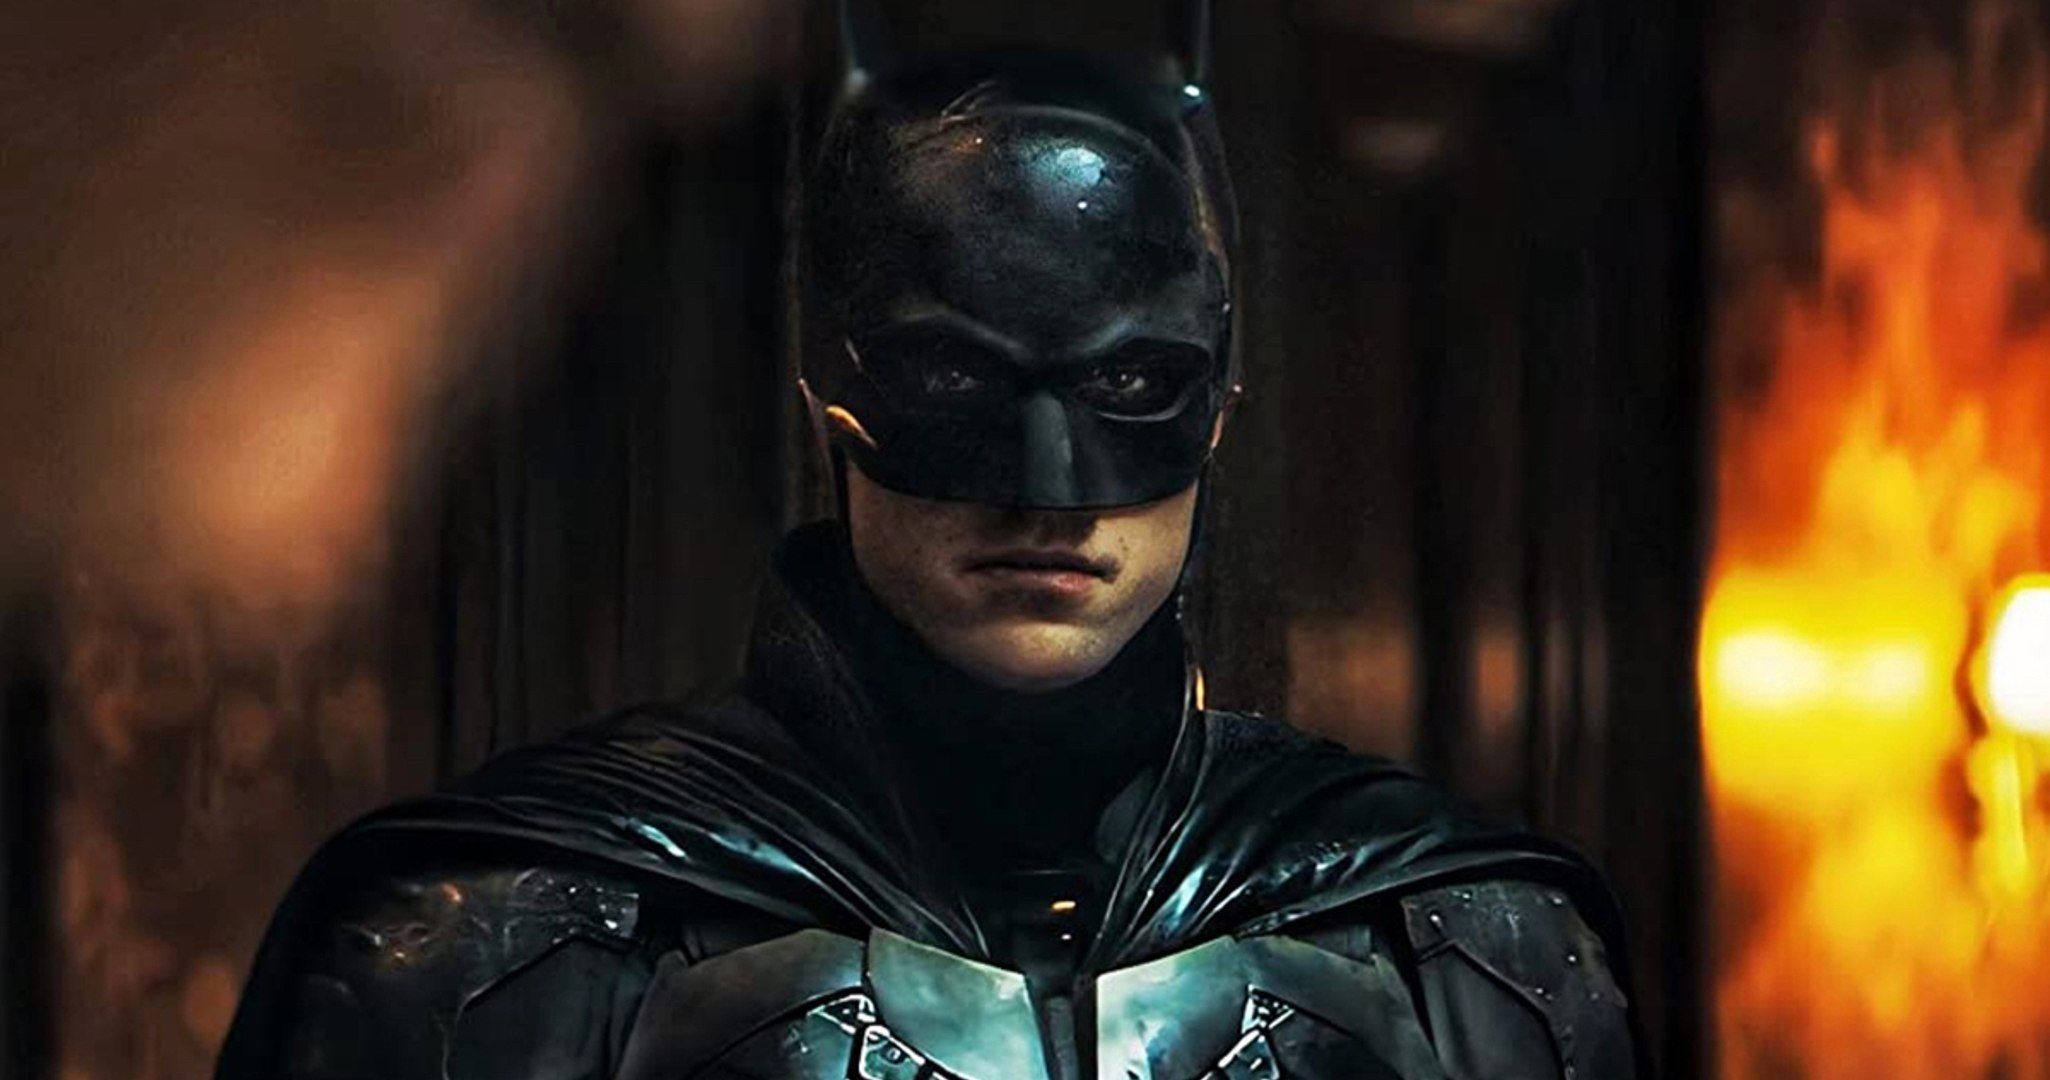 The Batman Composer Shares Video Revealing New Score